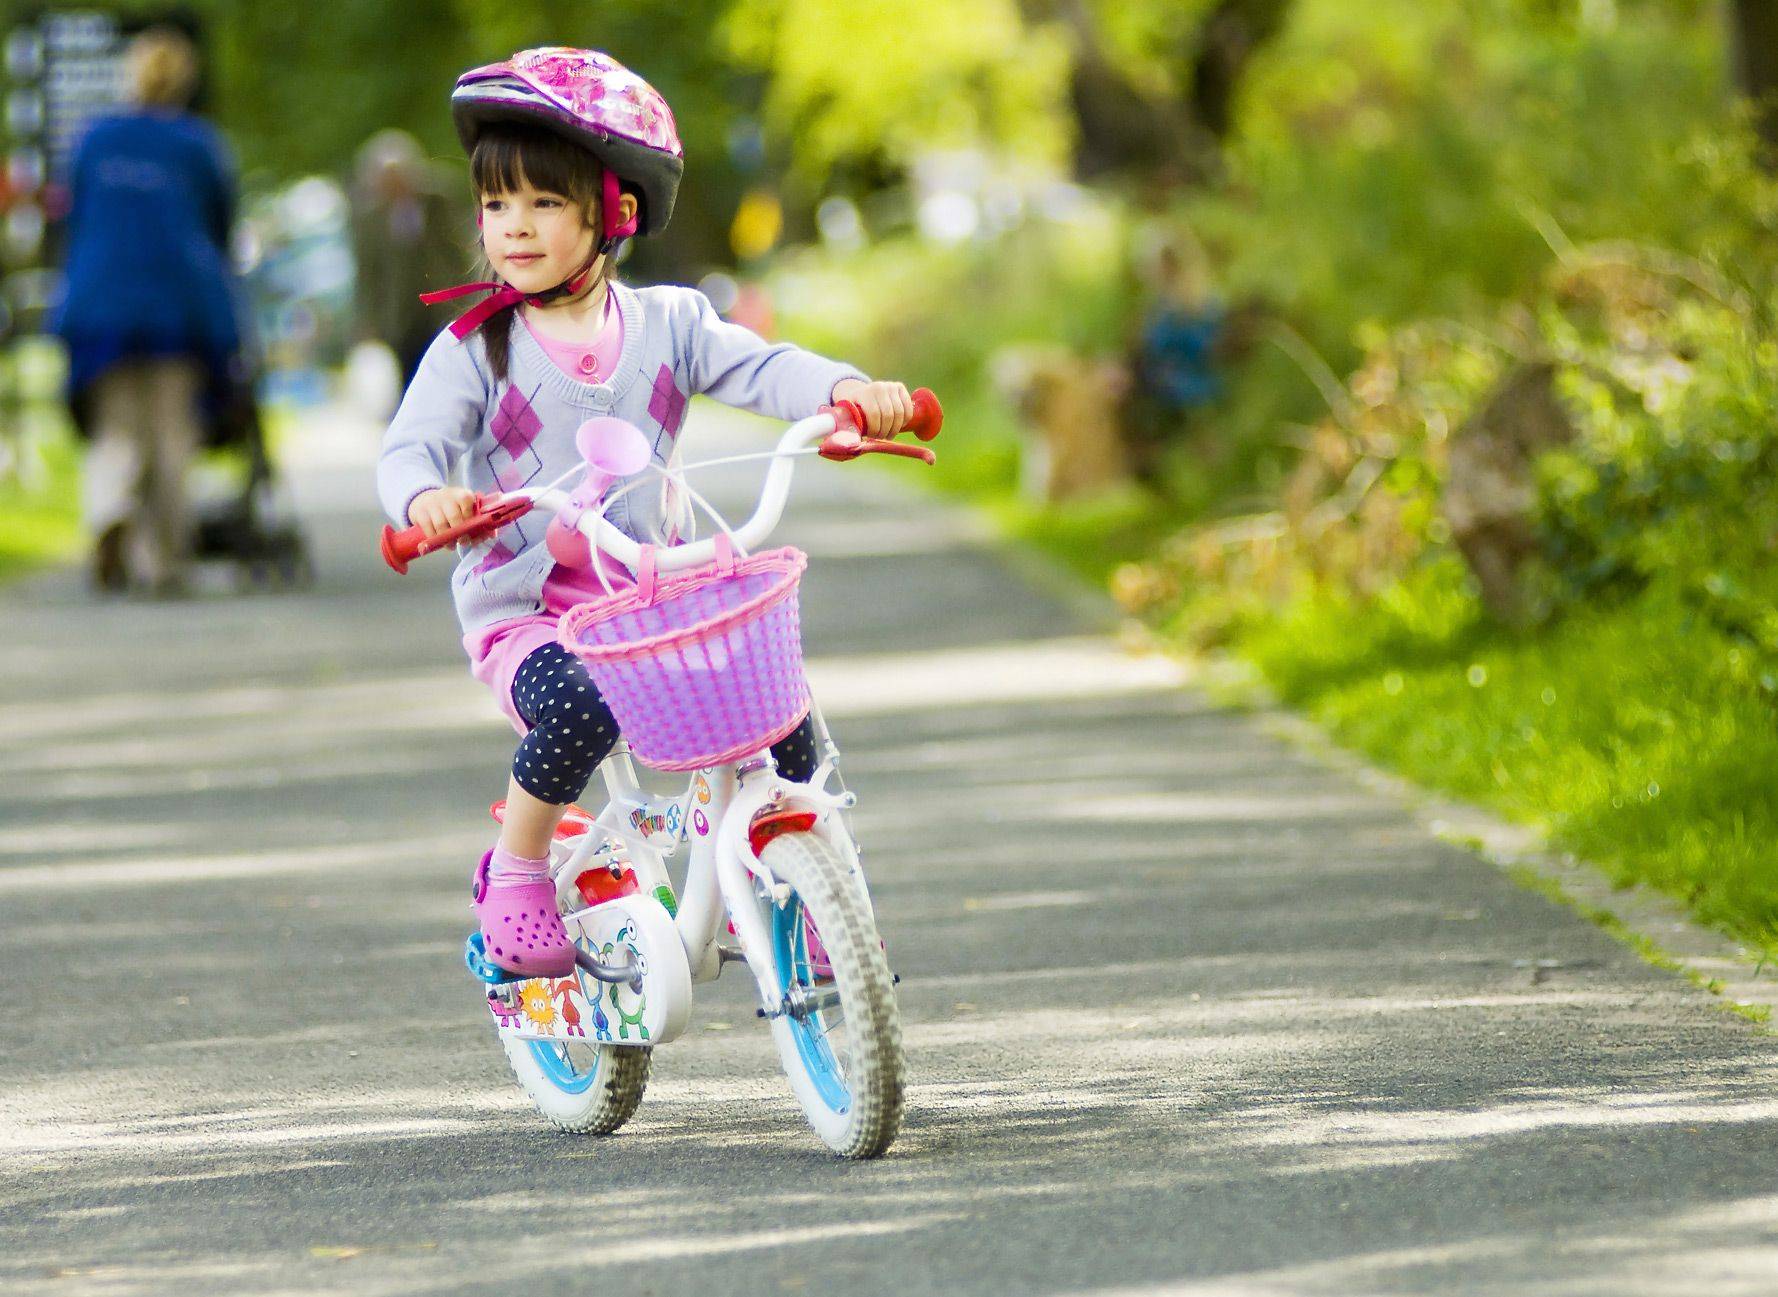 The children are riding bikes. Дети с велосипедом. Велик для детей. Велосипед для девочки. Катание на велосипеде дети.